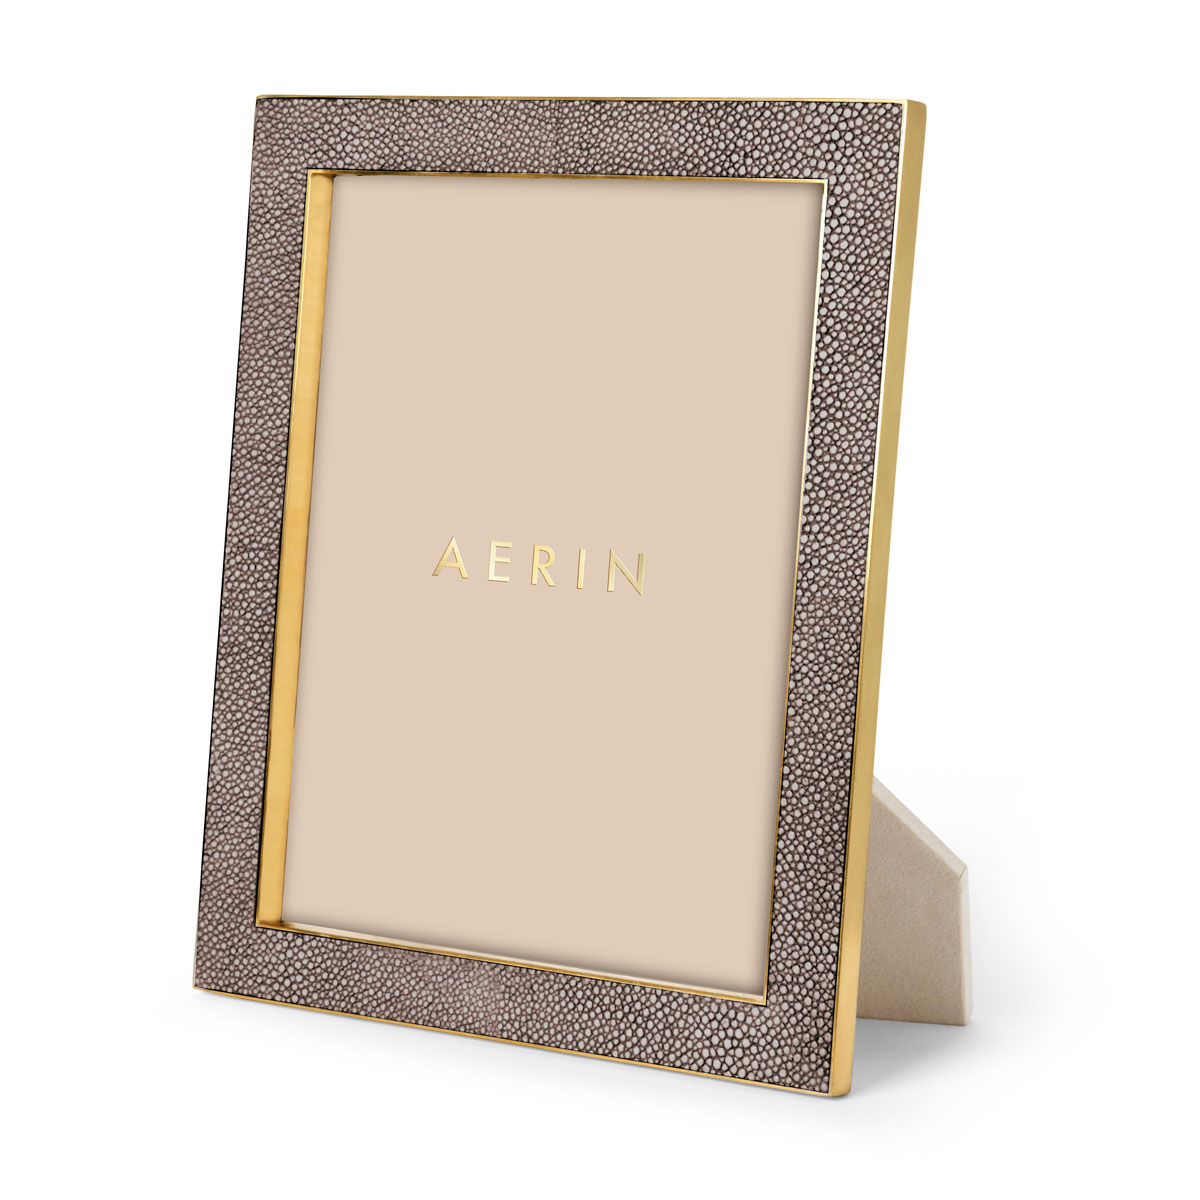 Aerin Classic Shagreen Frame, Chocolate 8x10"